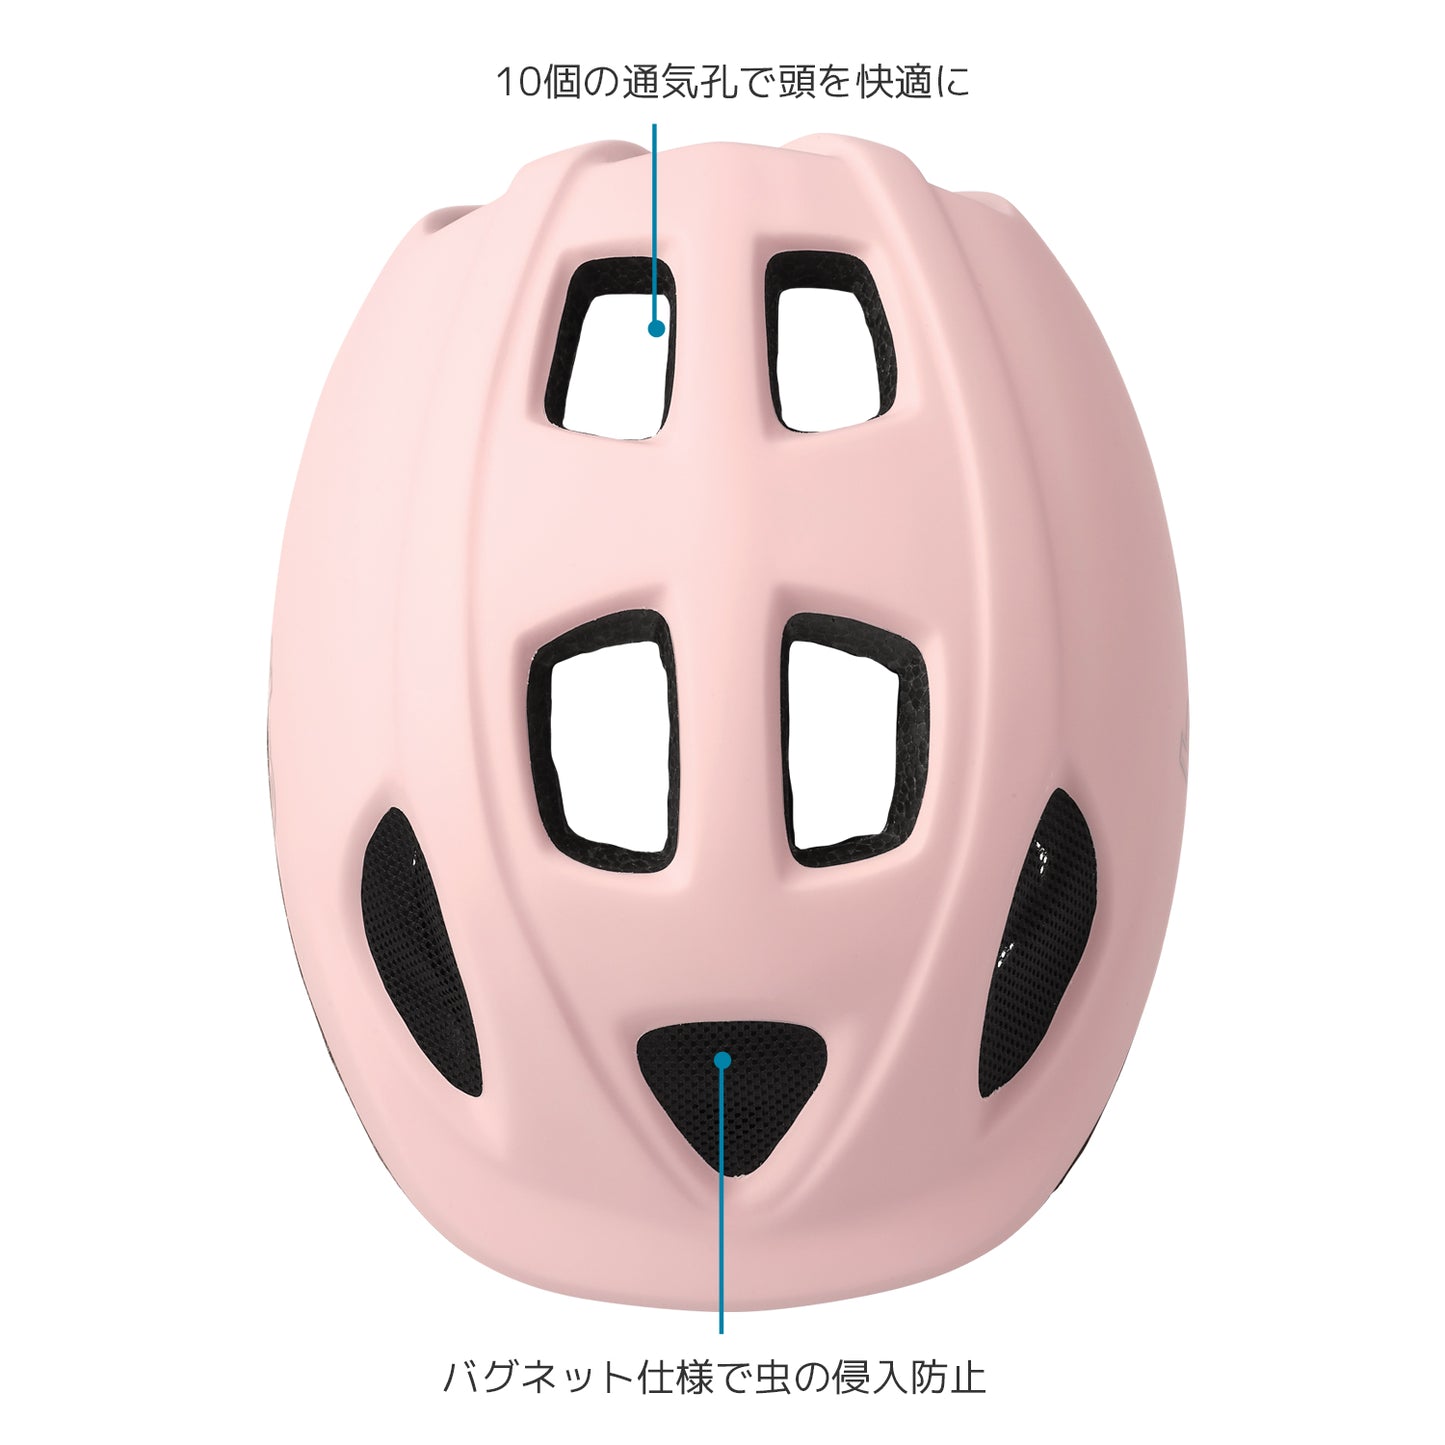 Bobike GO Helmet S（ボバイク・ゴー・ヘルメット・S）